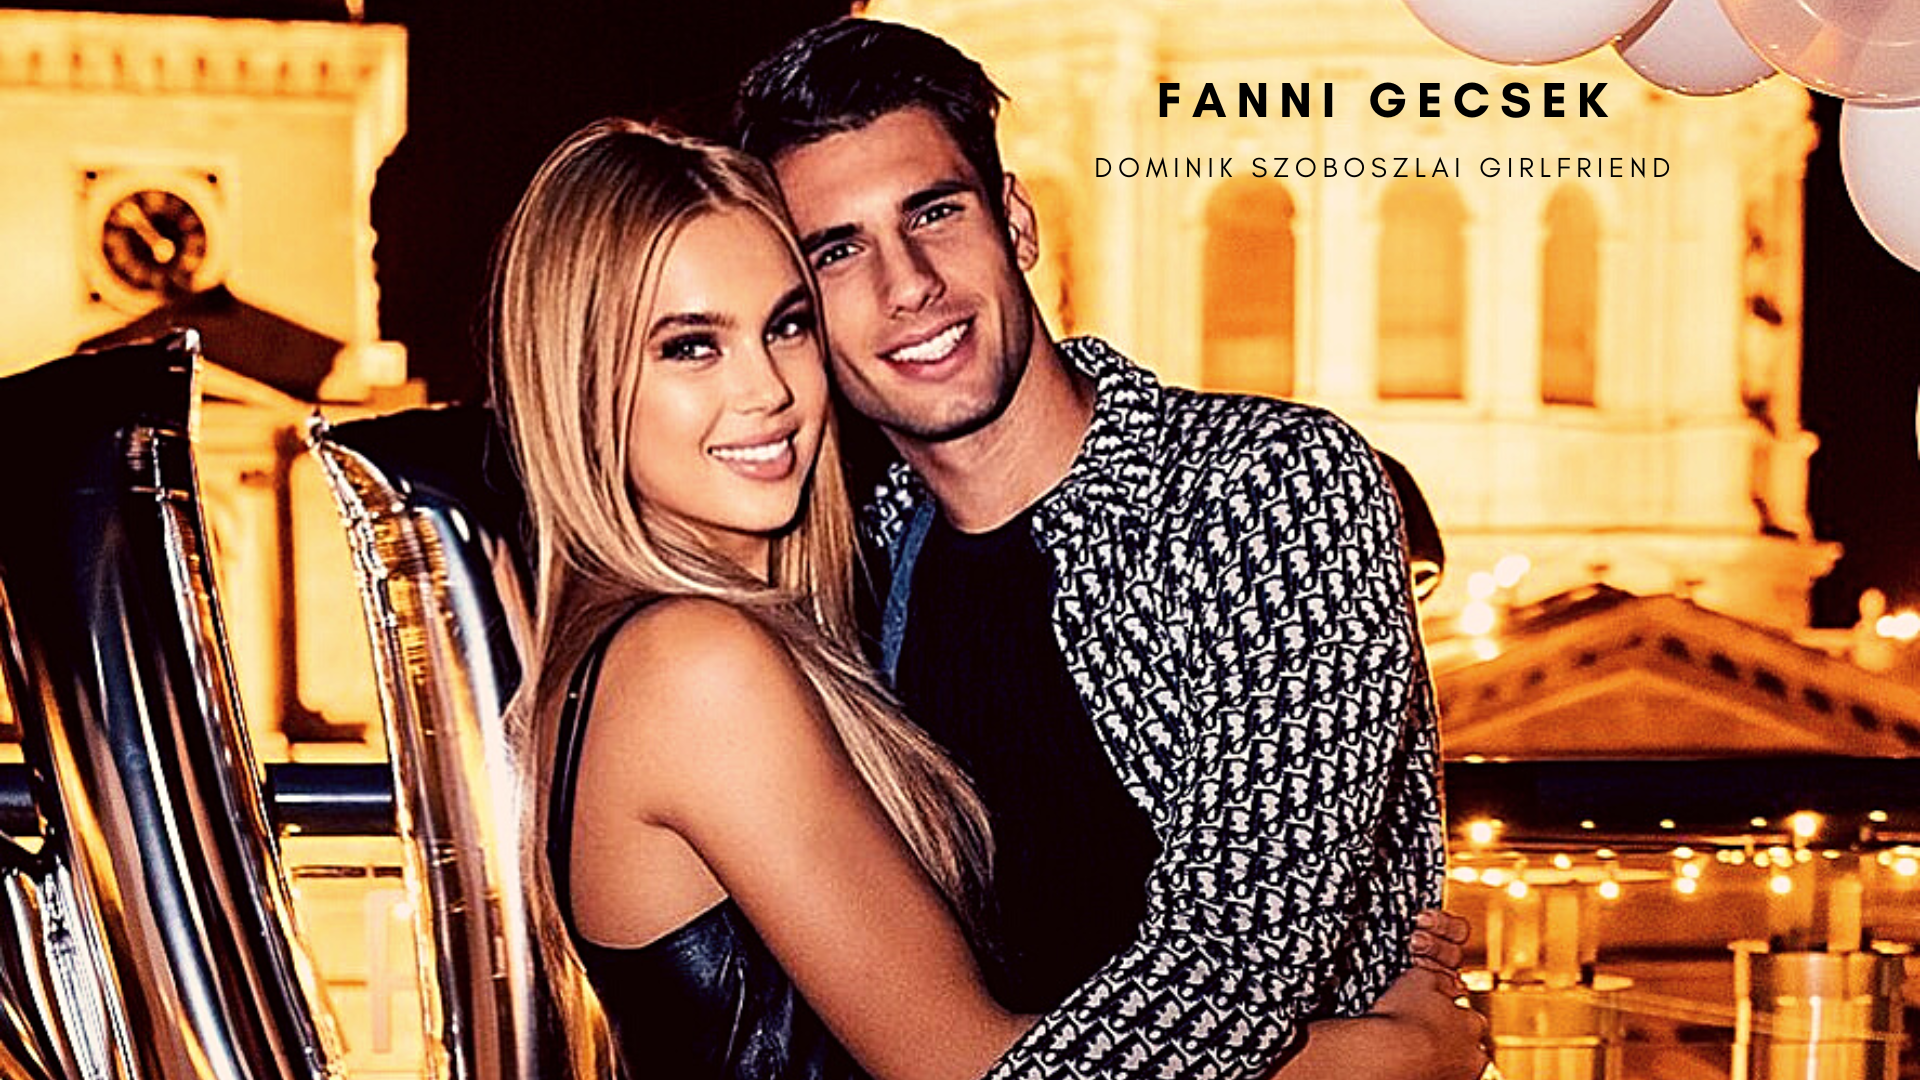 Dominik Szoboszlai with his girlfriend Fanni Gecsek. (Credit: Instagram)